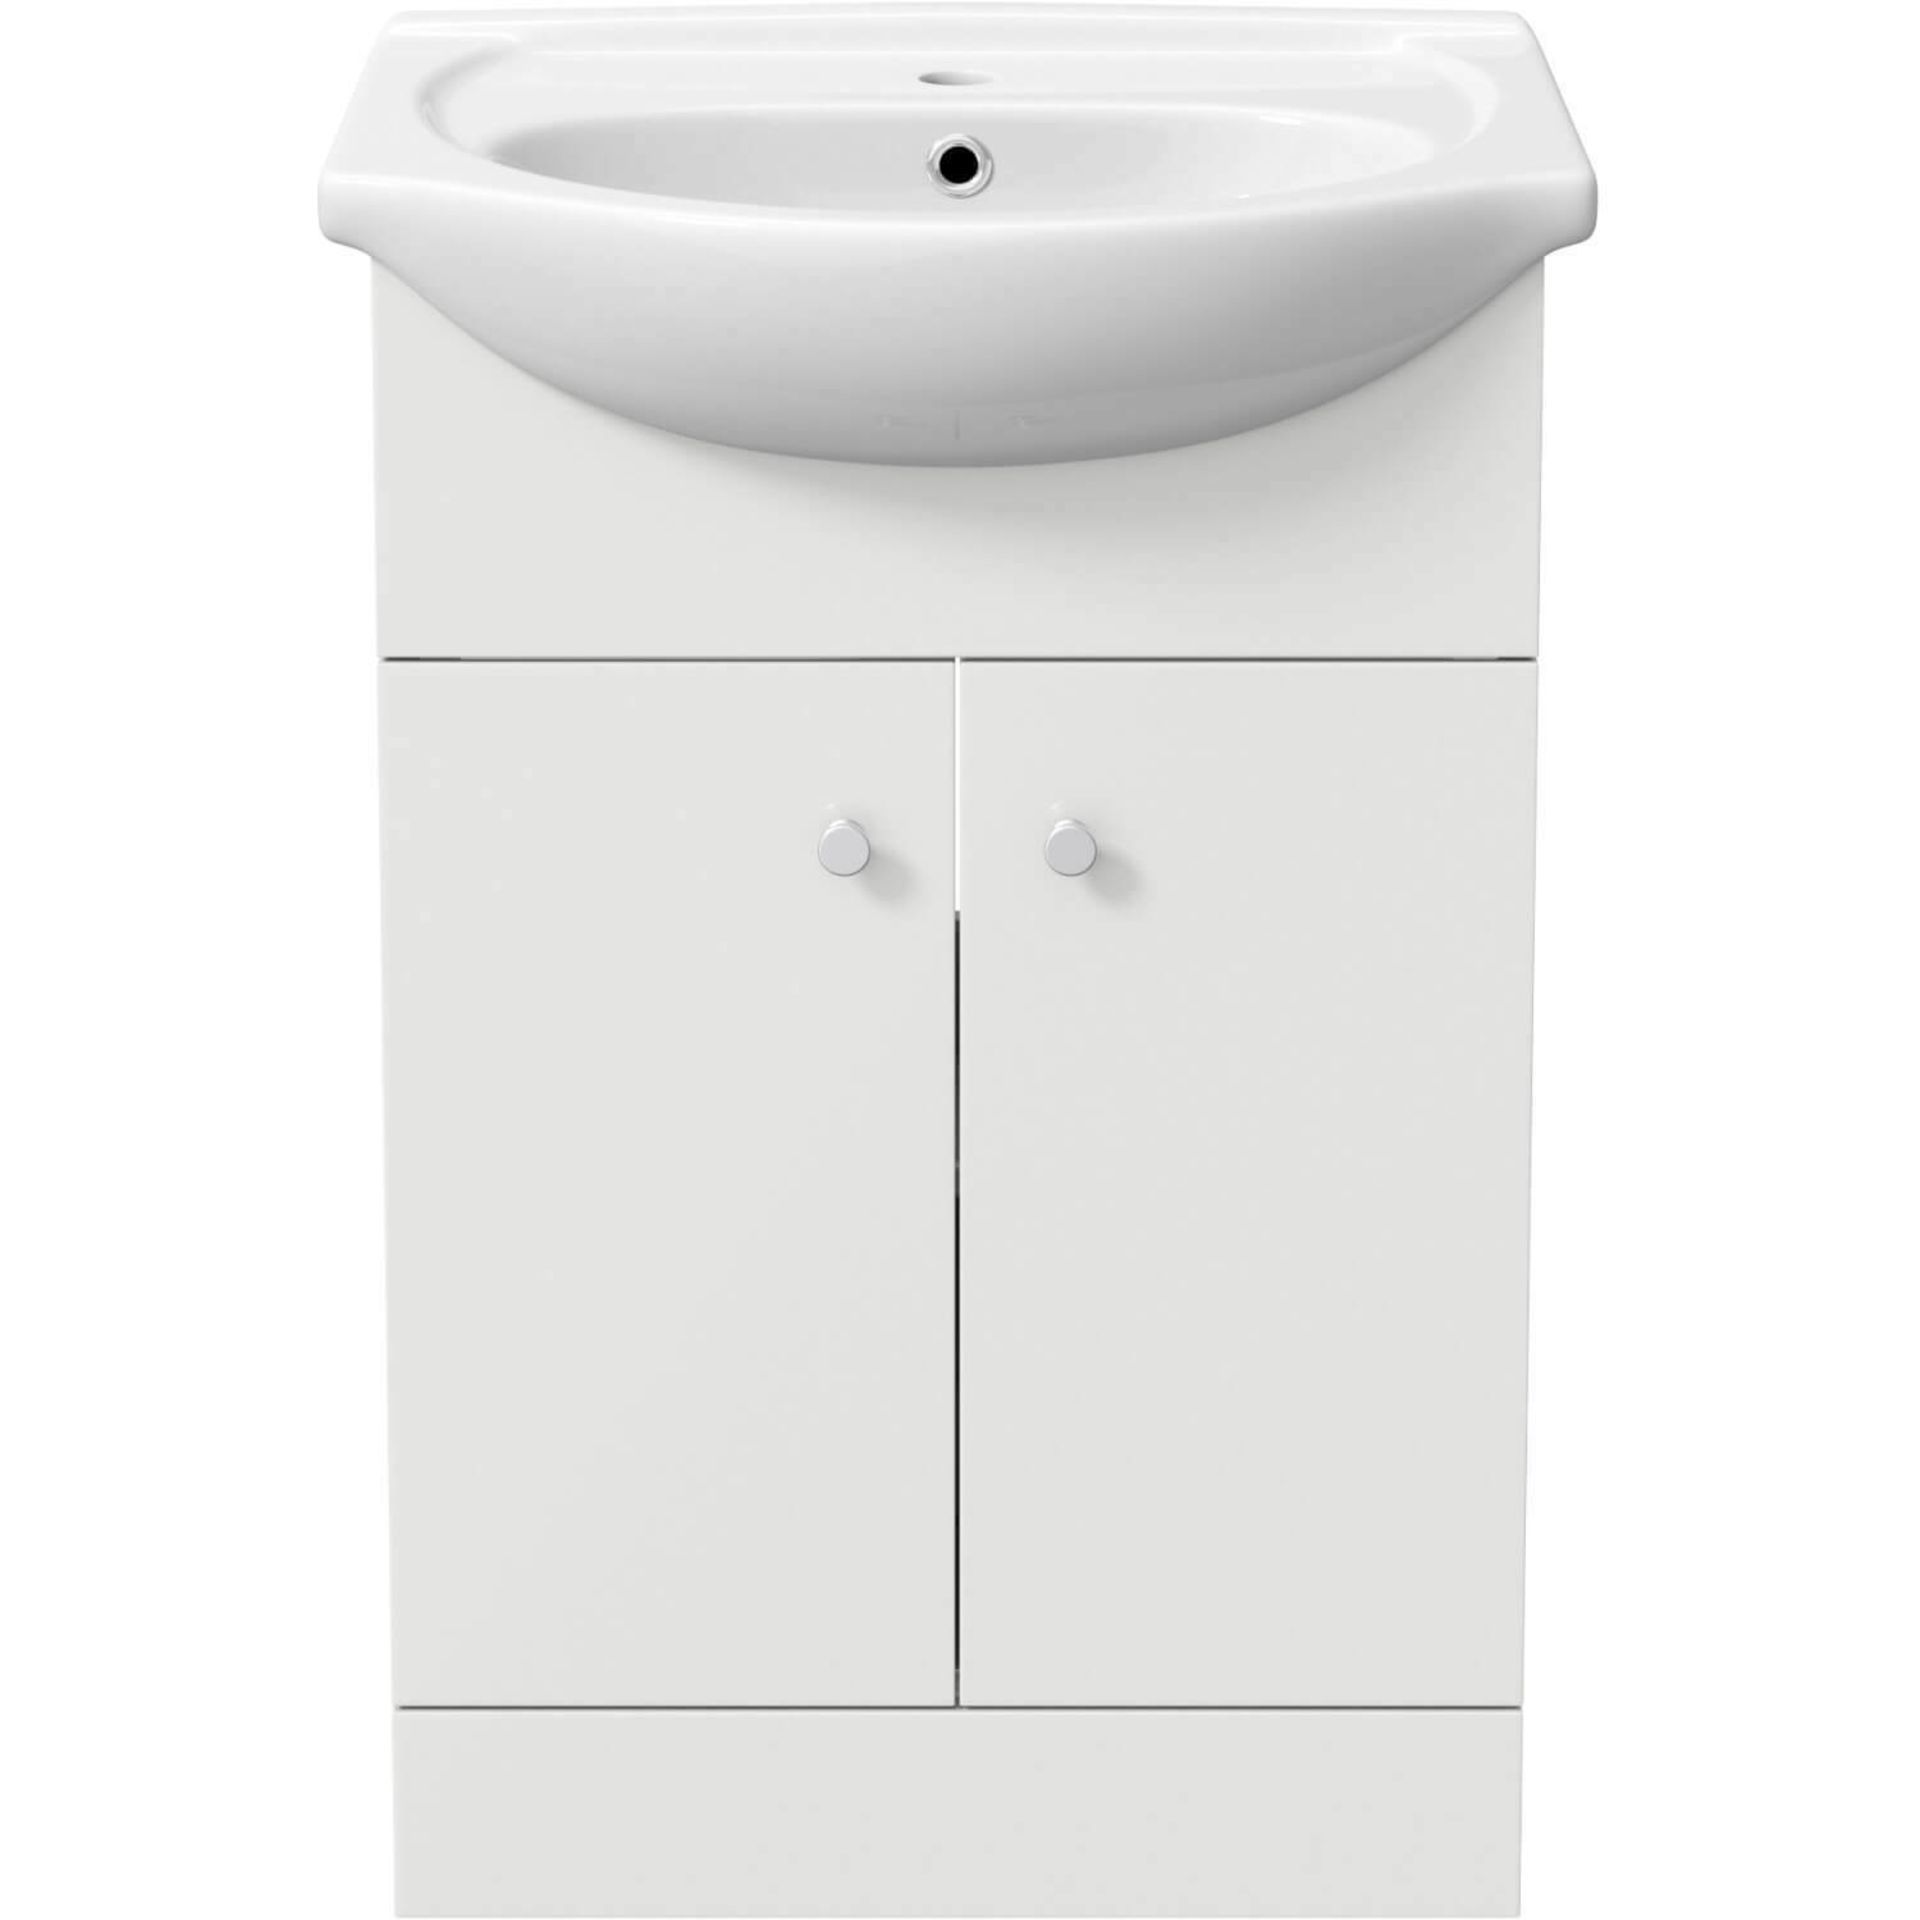 BRAND NEW BOXED 550mm Quartz Basin Sink Vanity Unit Floor Standing White.RRP £349.99.Comes com... - Image 3 of 3